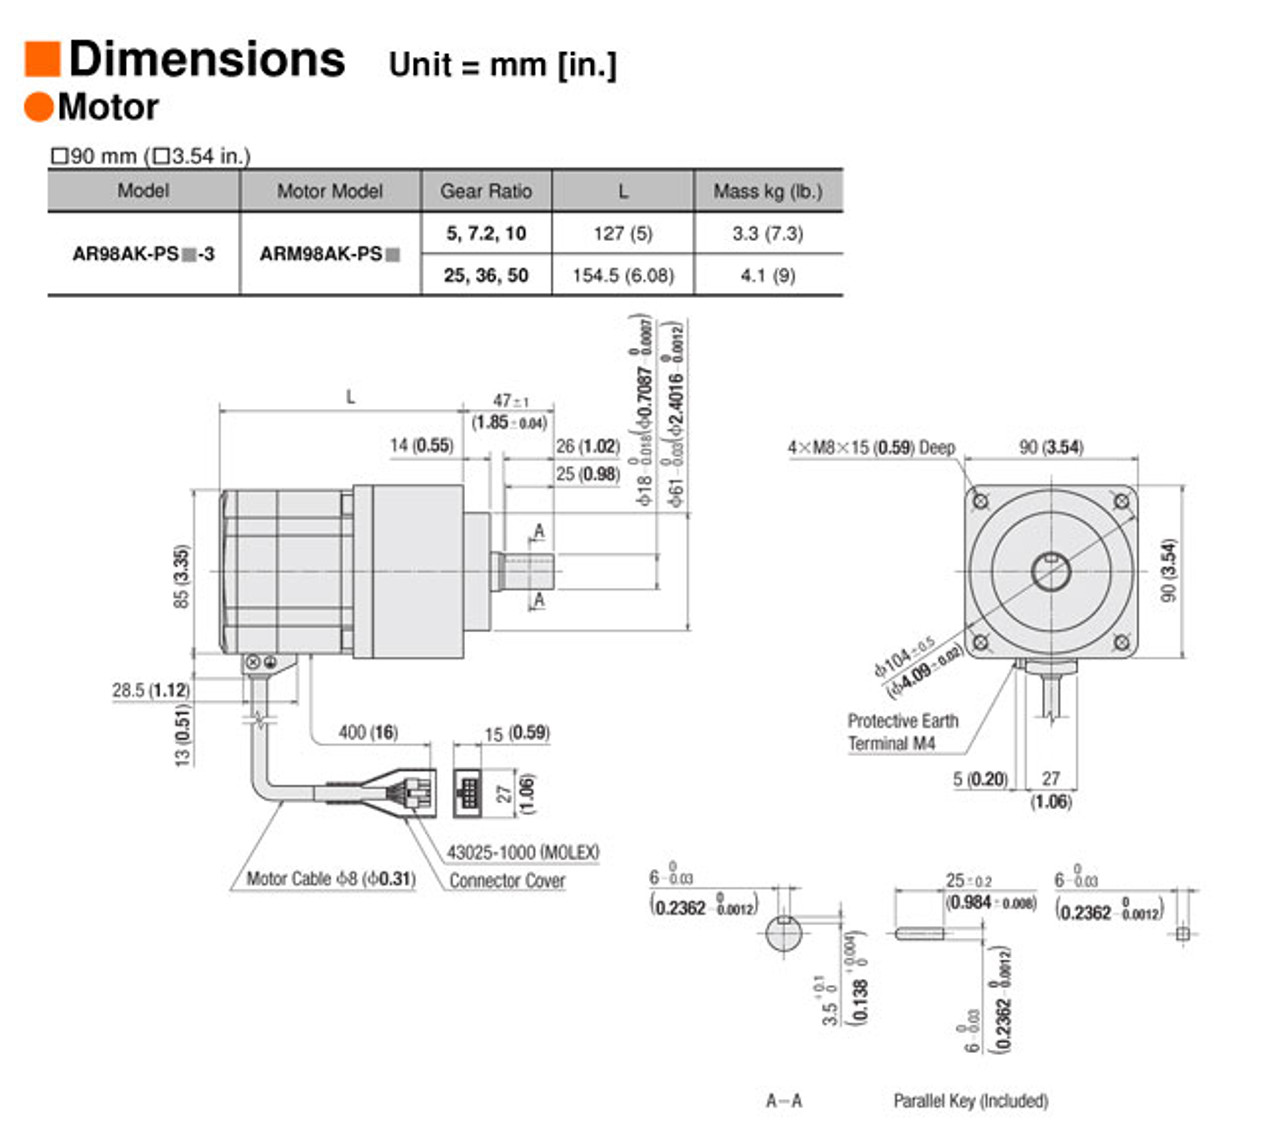 AR98AK-PS50-3 - Dimensions